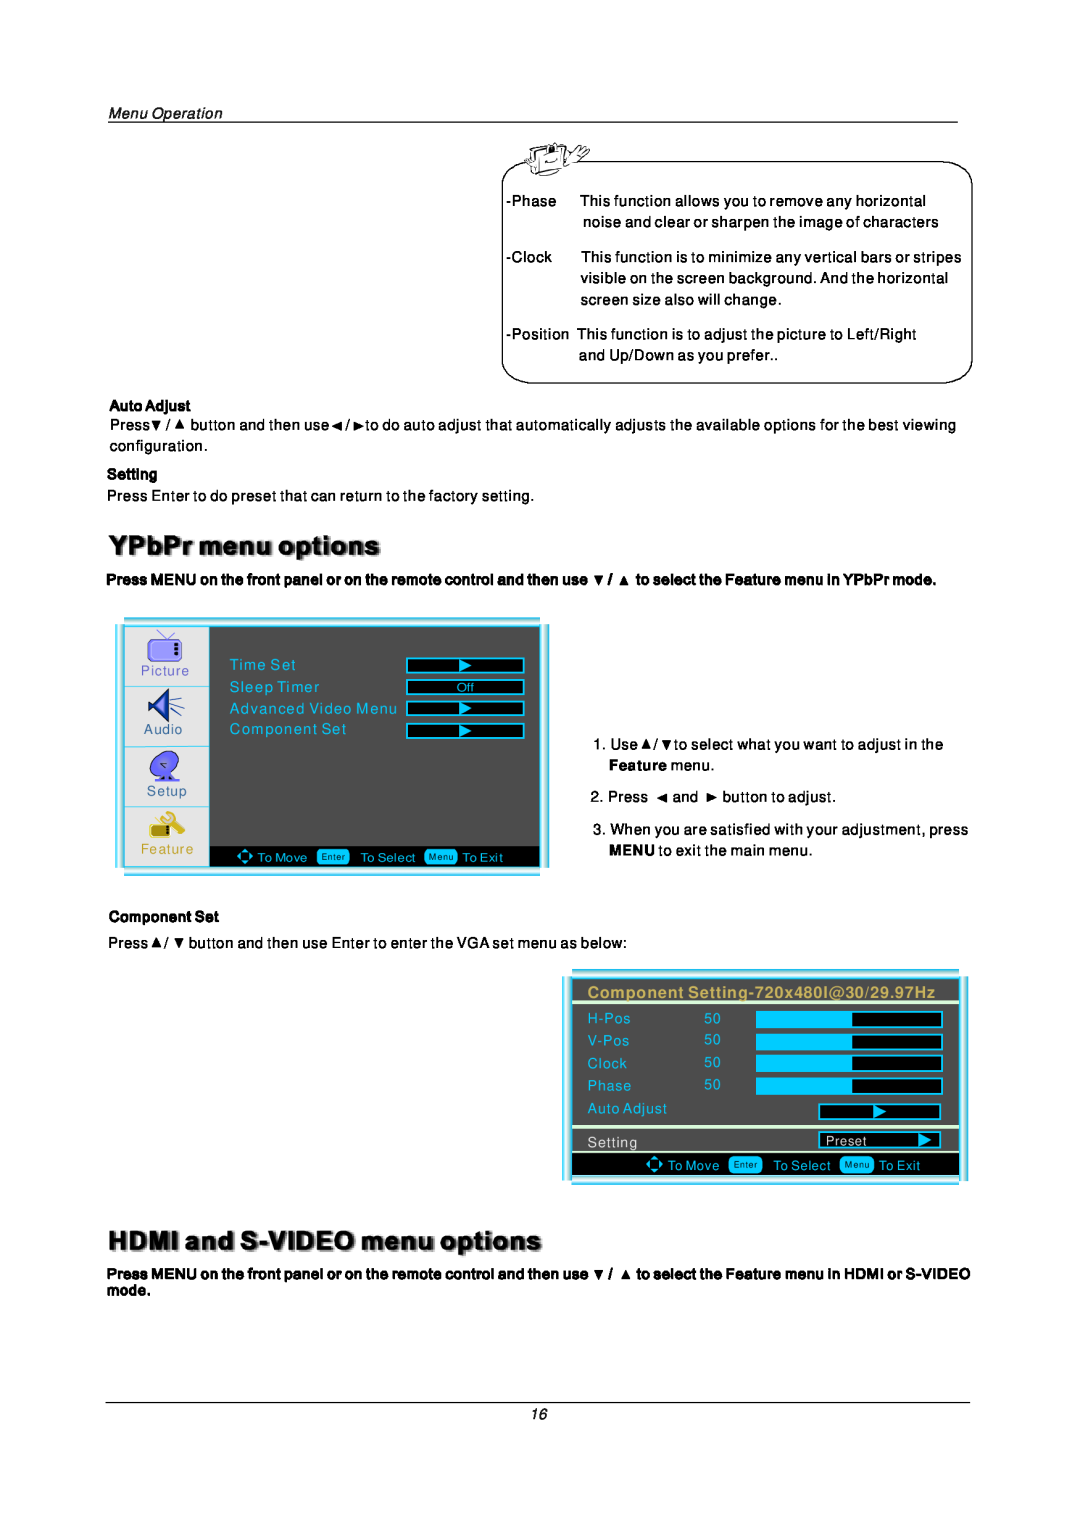 Radio Shack P26LCD manual Menu Operation, Component Setting-720x480I@30/29.97Hz, SettingPreset 